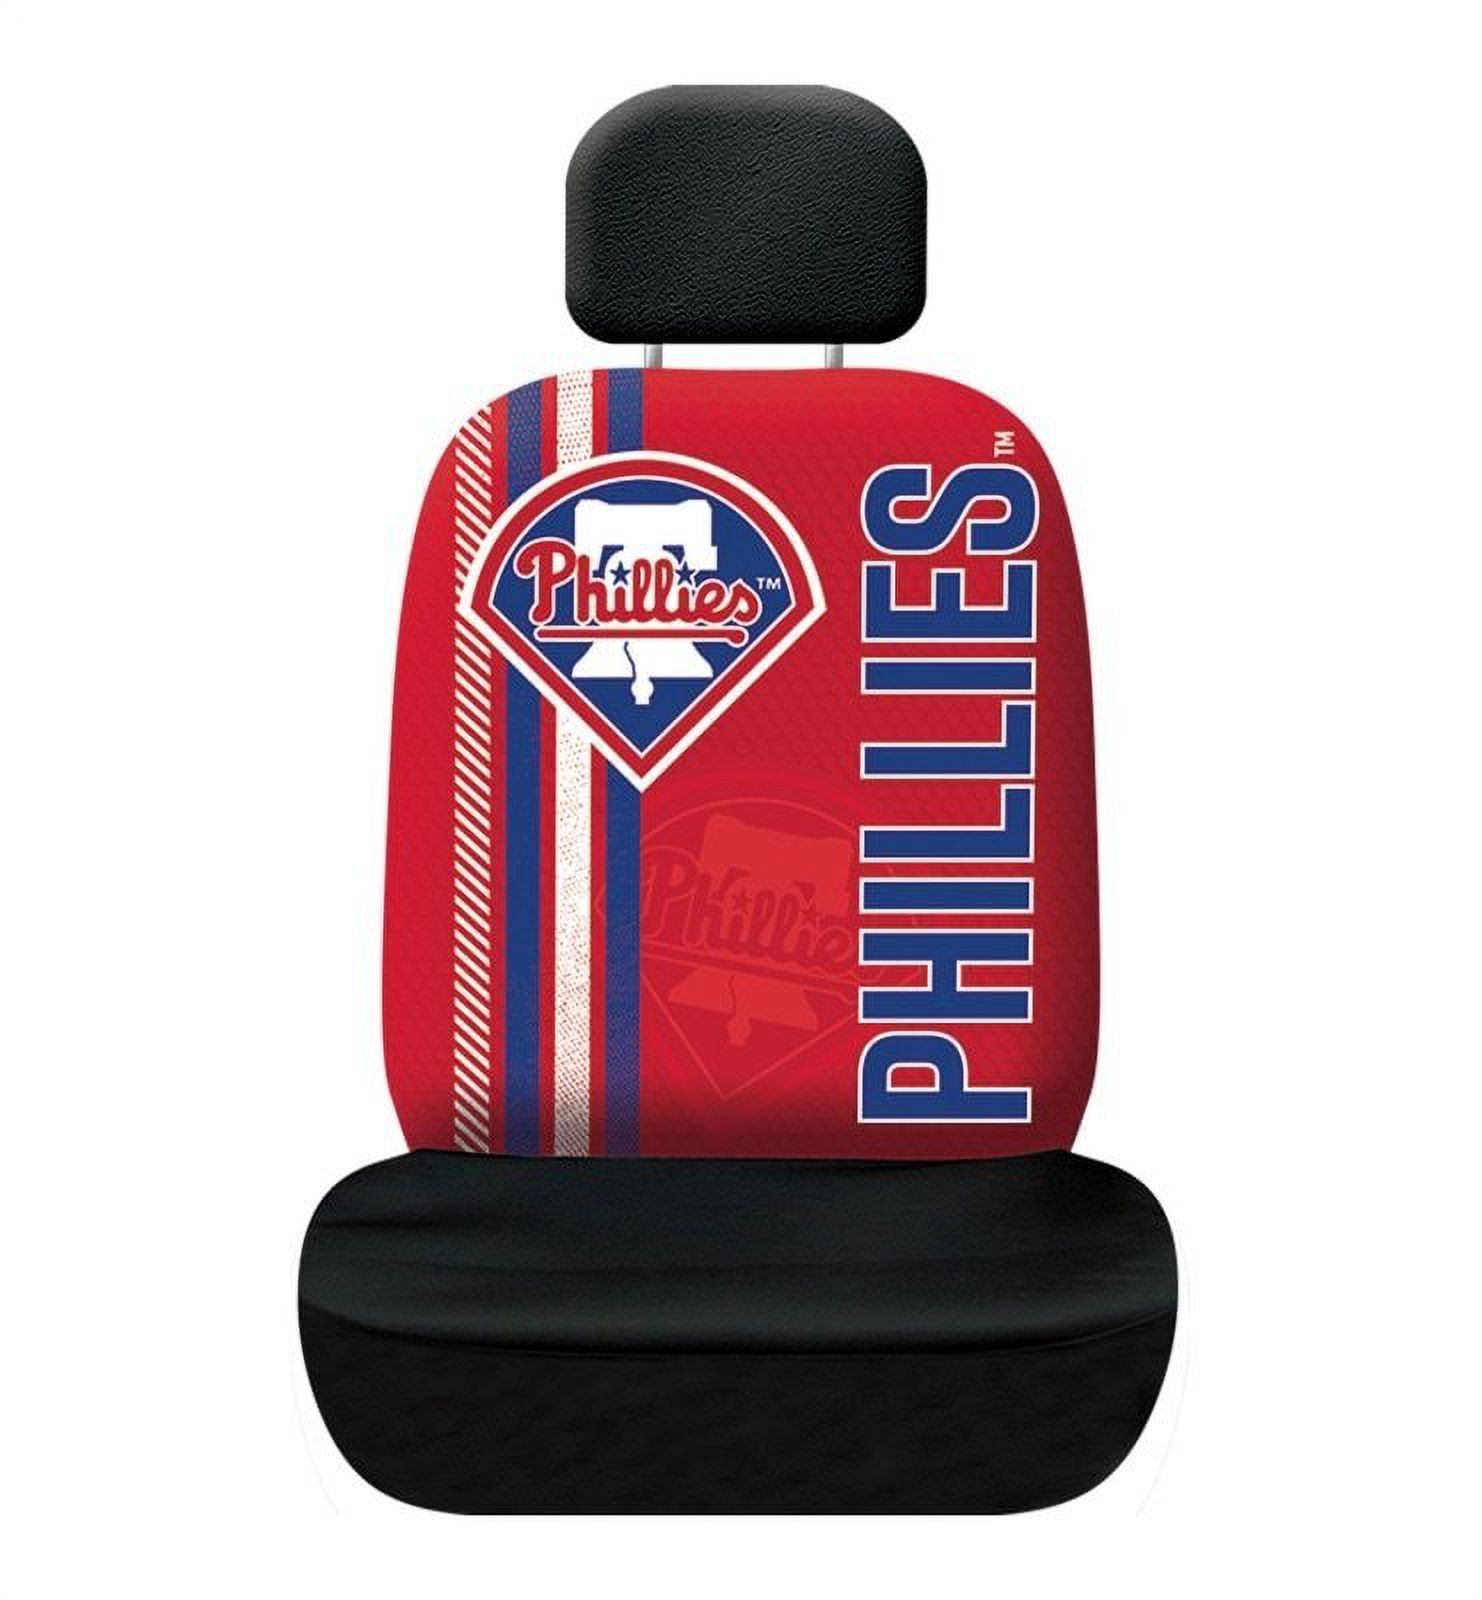 MLB Philadelphia Phillies Rally Seat Cover - image 2 of 2